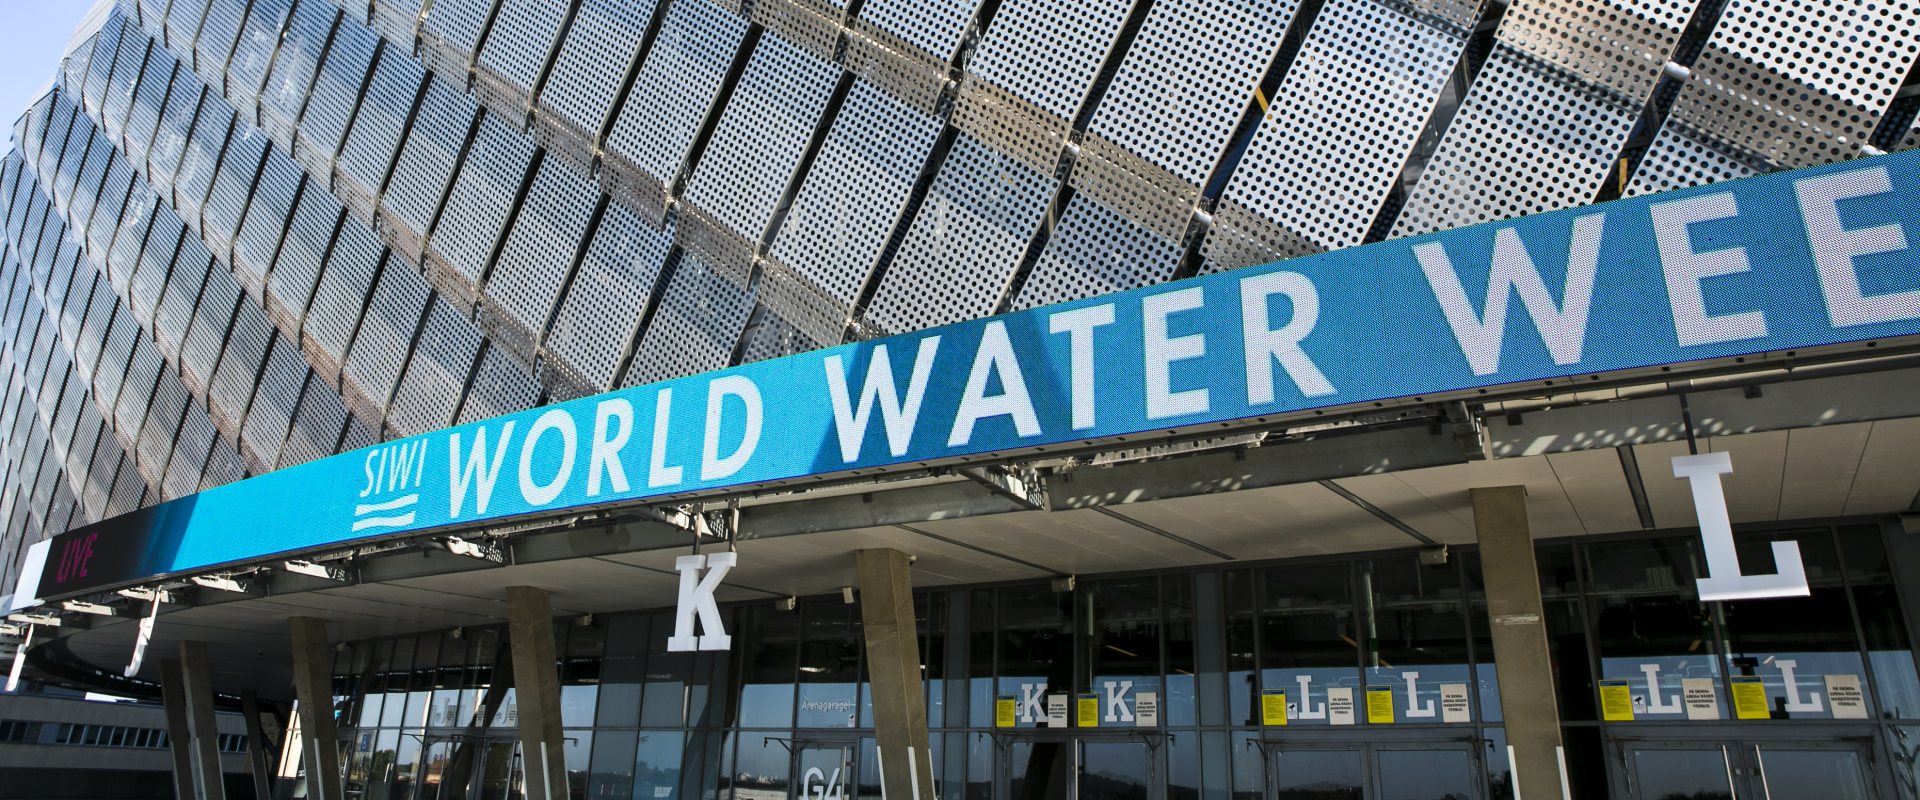 WWWeek Serious global water talks at Stockholm online Dutch Water Sector